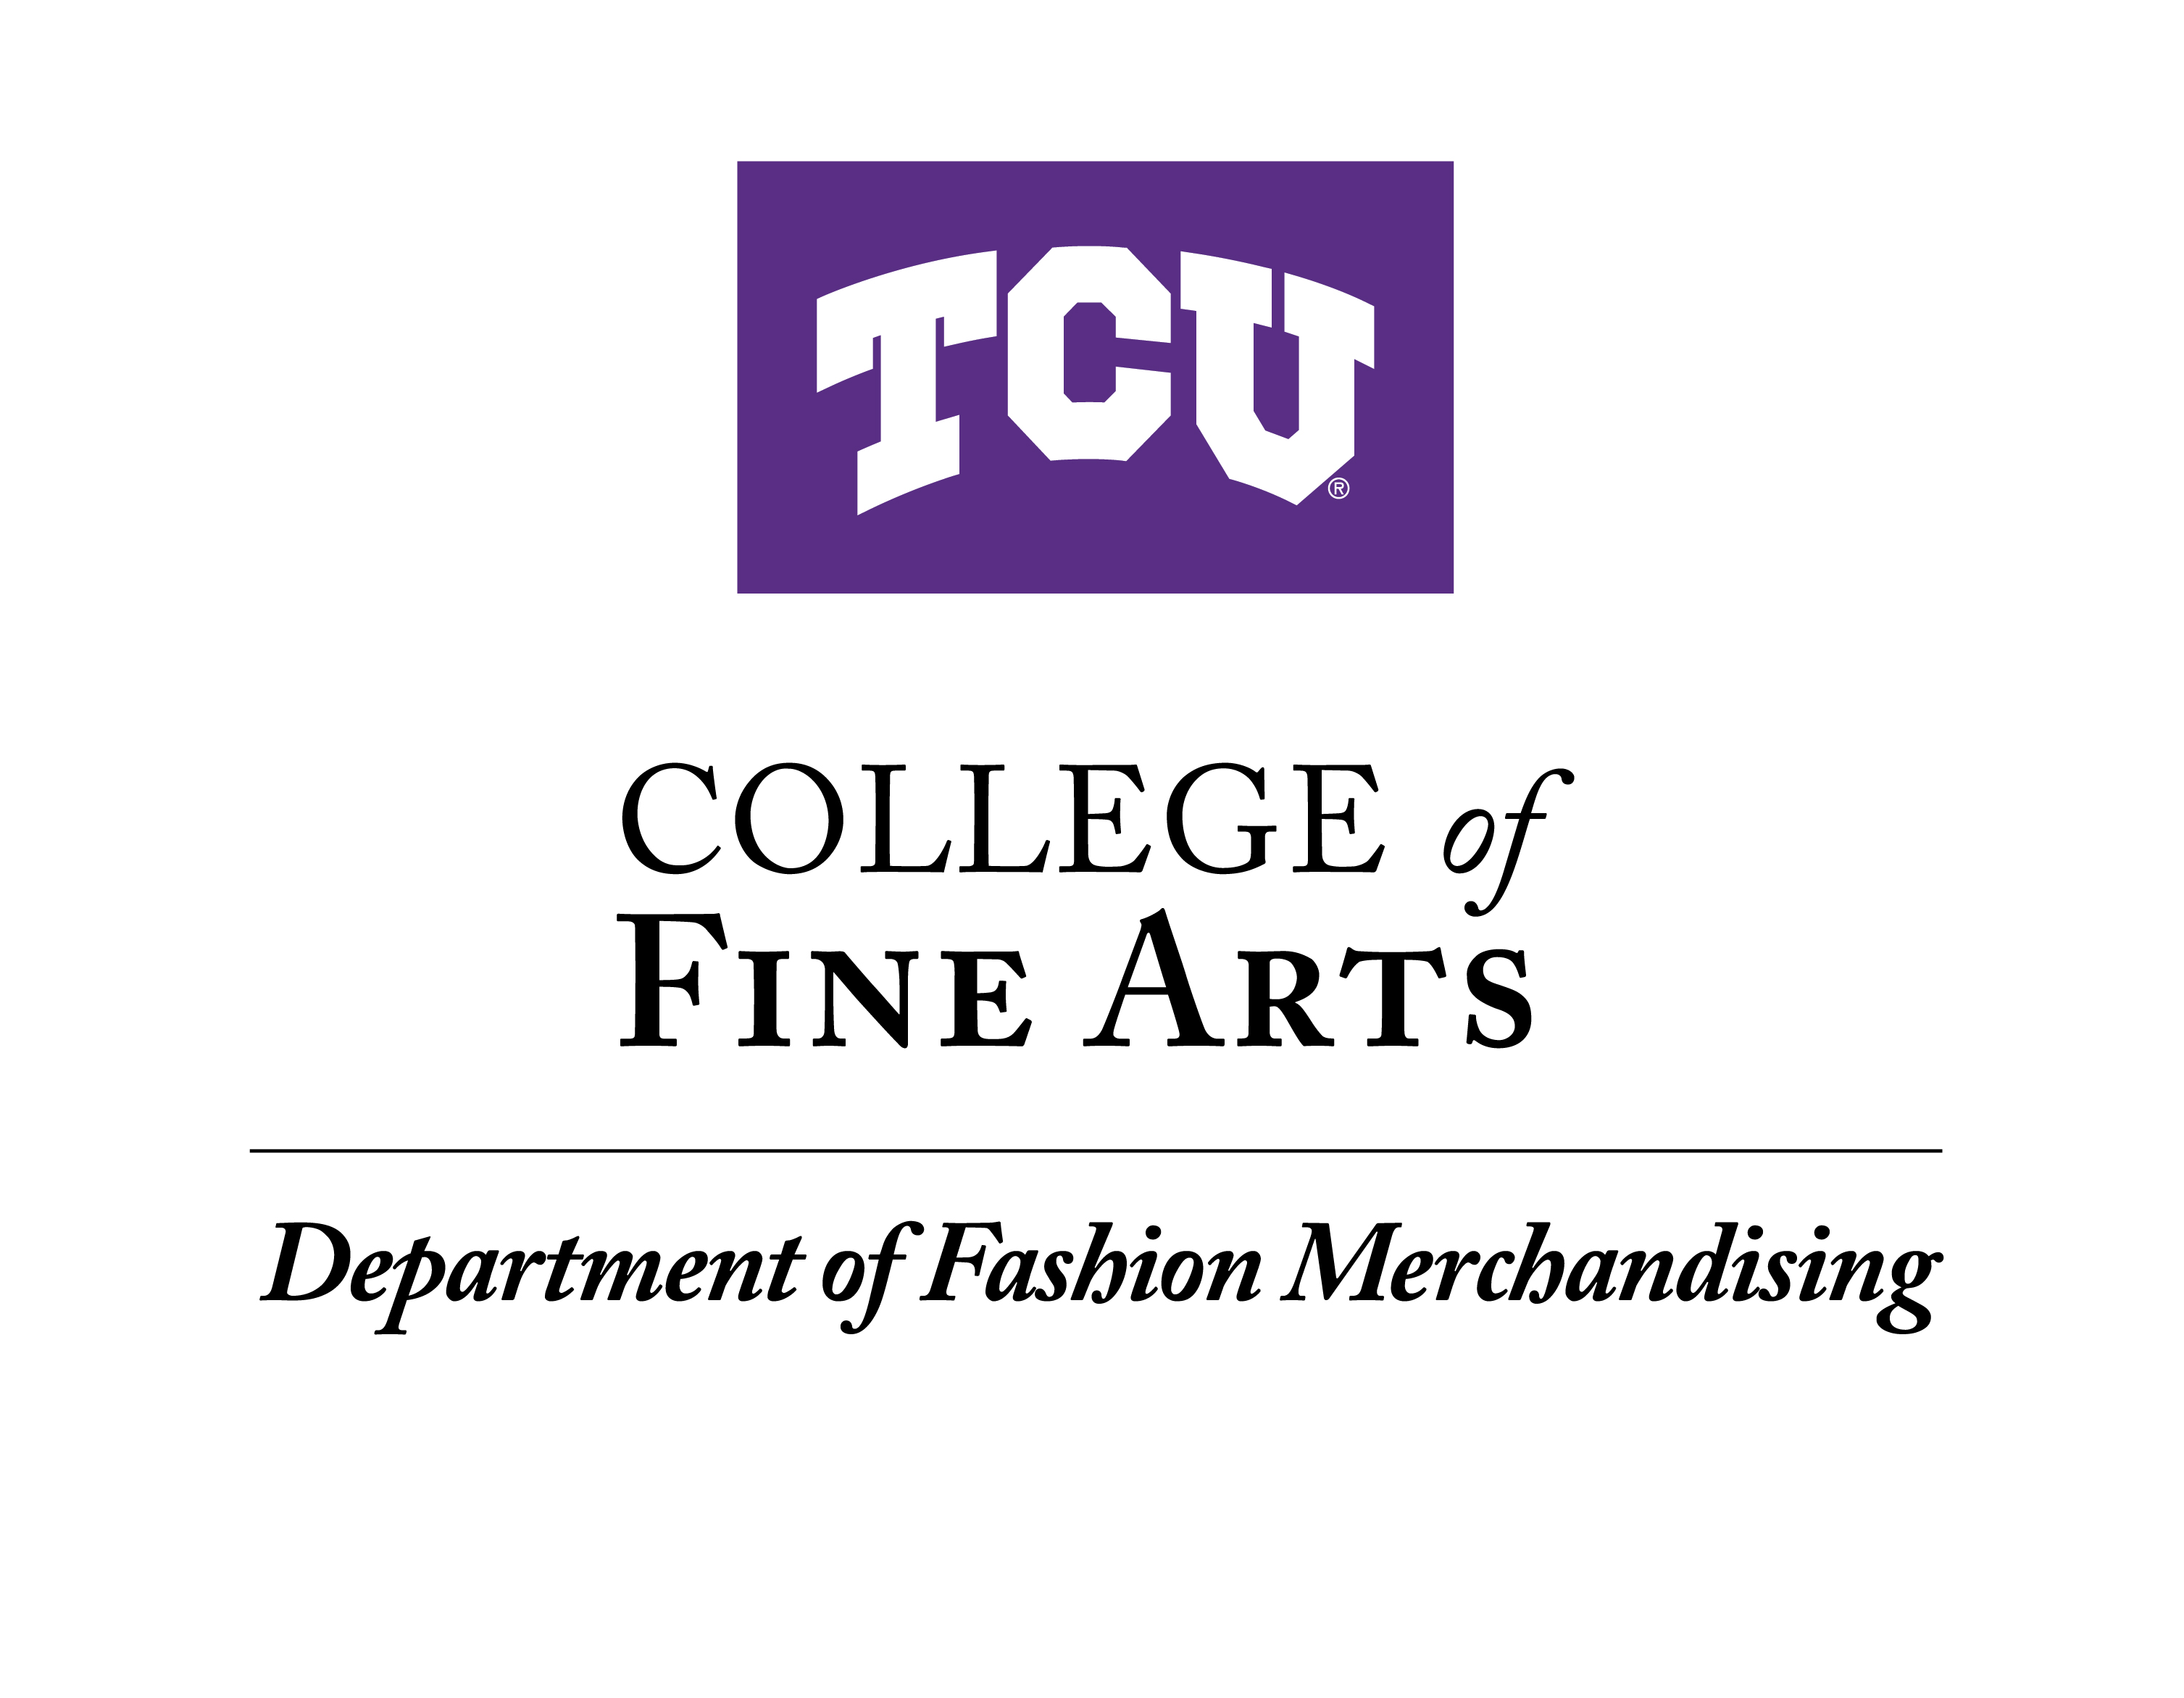 TCU College of Fine Arts Department of Fashion Merchandising word mark